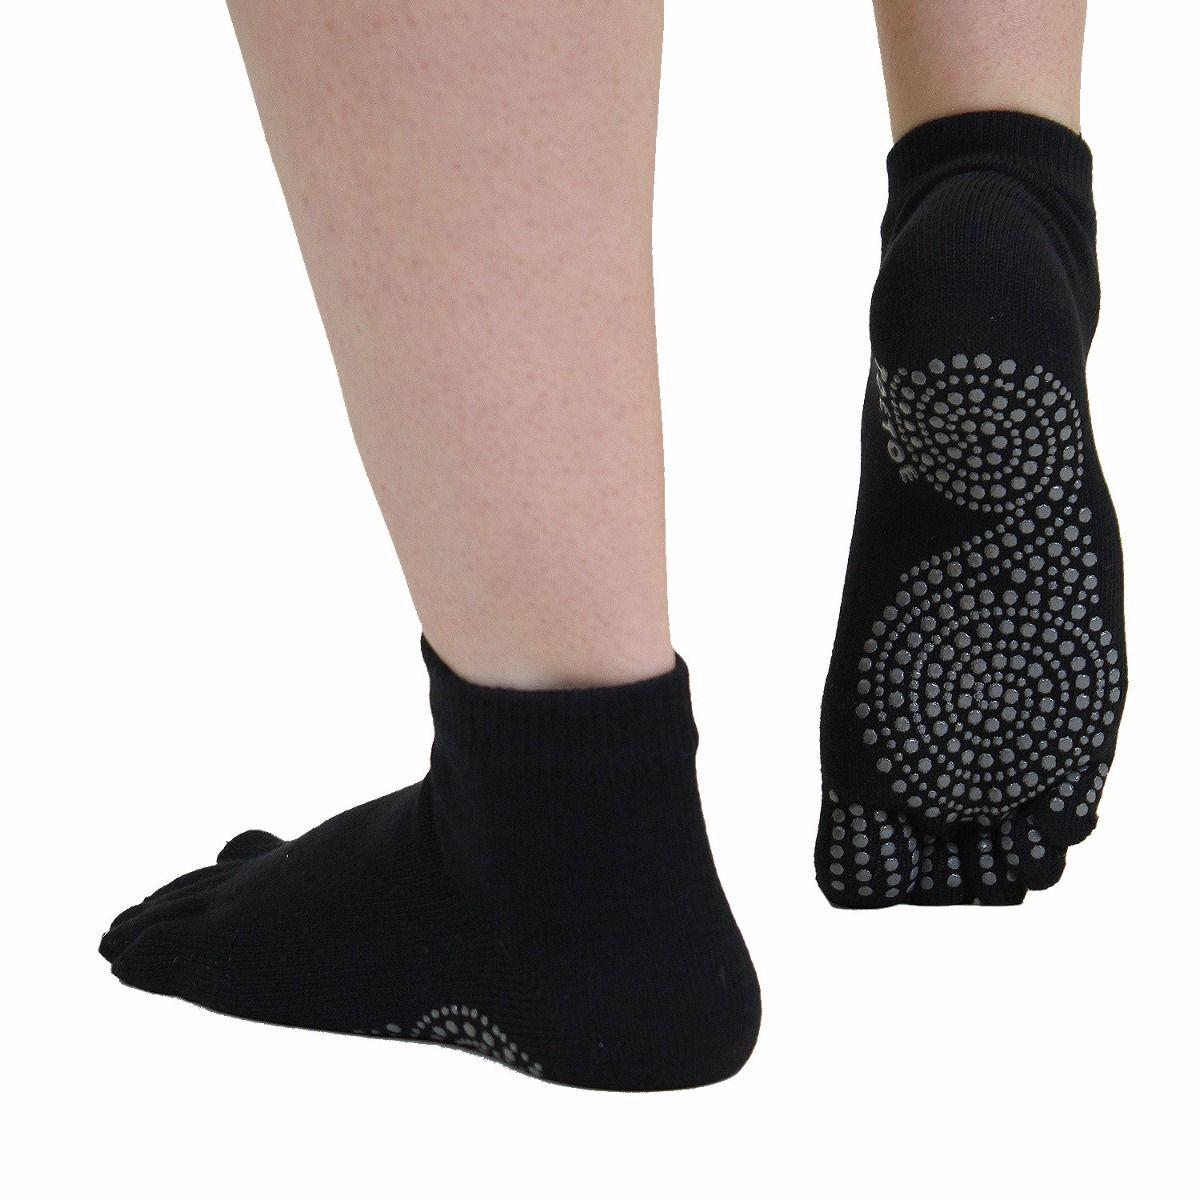 toe-socks-yoga-pilates-anti-slip-trainer-black-sole-walking